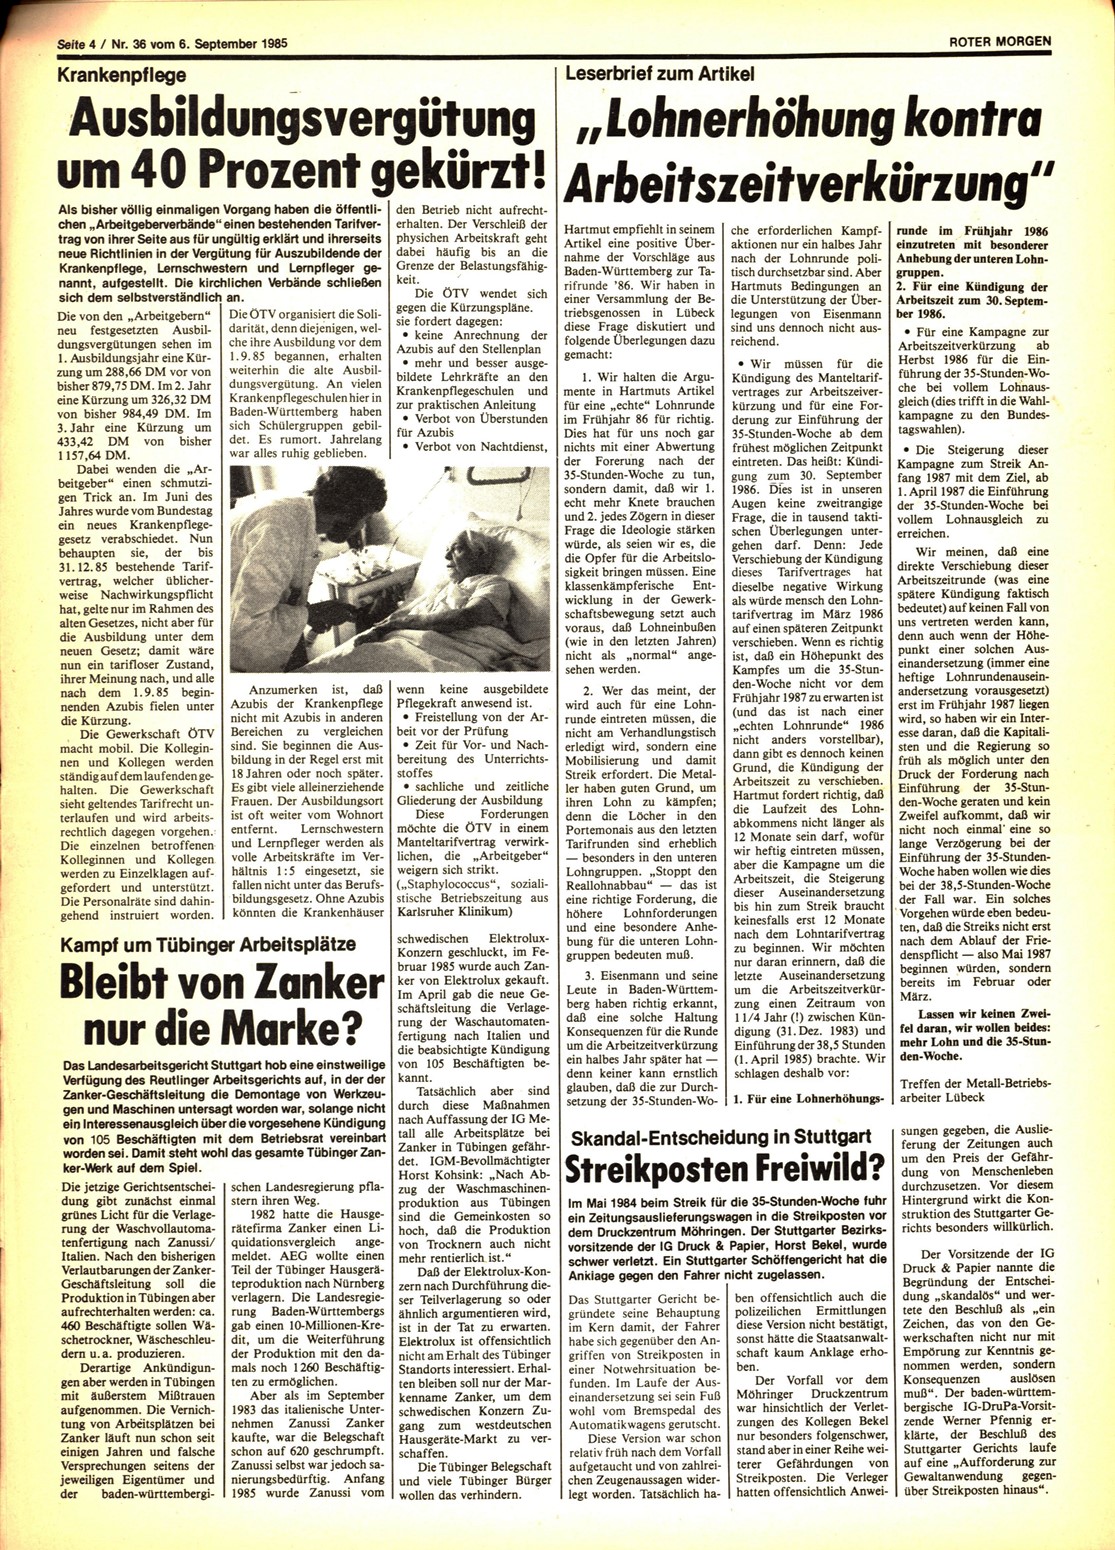 Roter Morgen, 19. Jg., 6. September 1985, Nr. 36, Seite 4